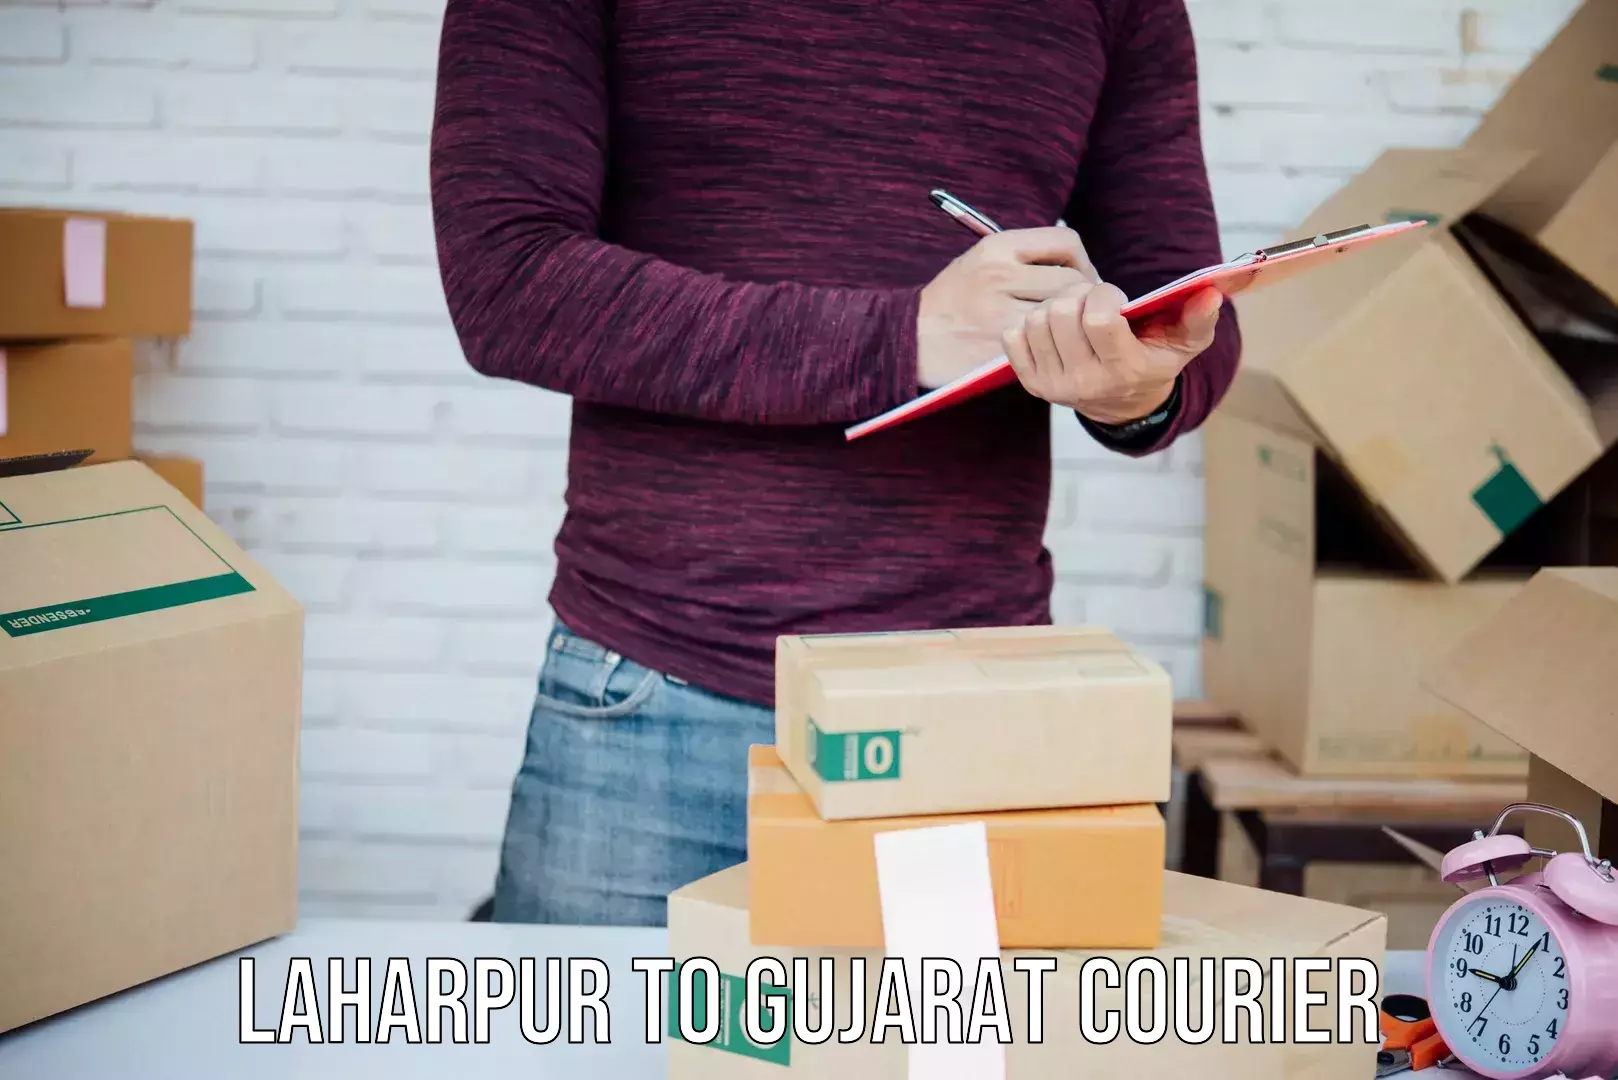 Cargo delivery service Laharpur to Valsad